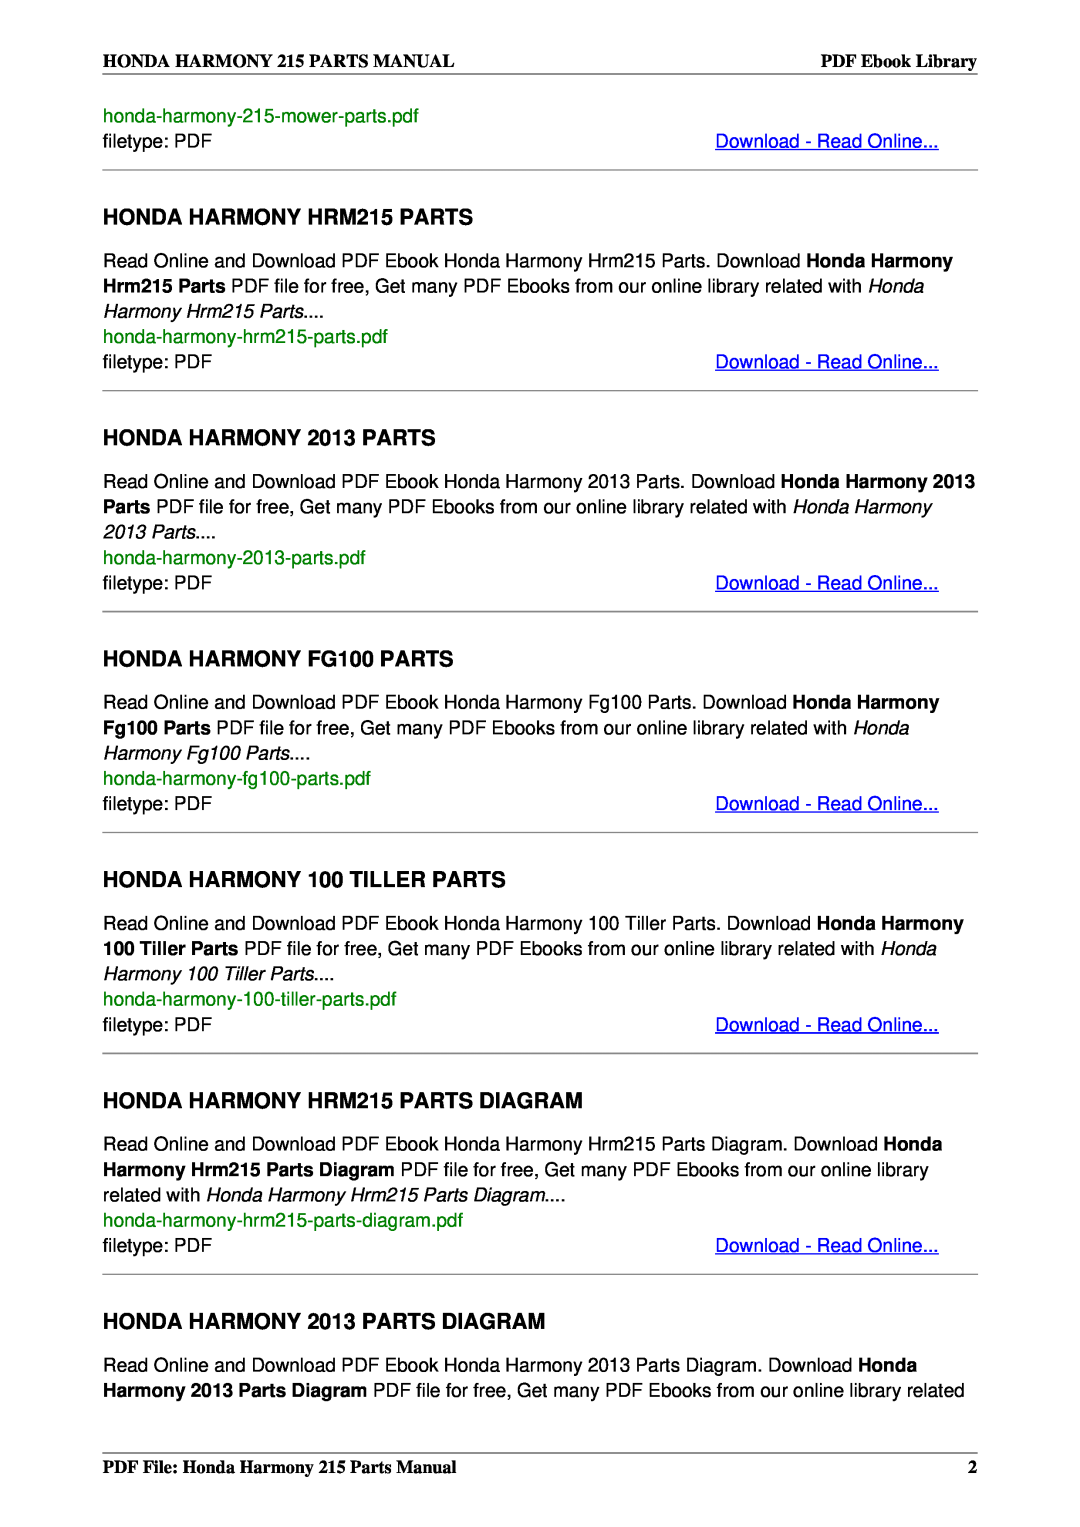 Honda Power Equipment manual HONDA HARMONY HRM215 PARTS, HONDA HARMONY 2013 PARTS, HONDA HARMONY FG100 PARTS, Parts 